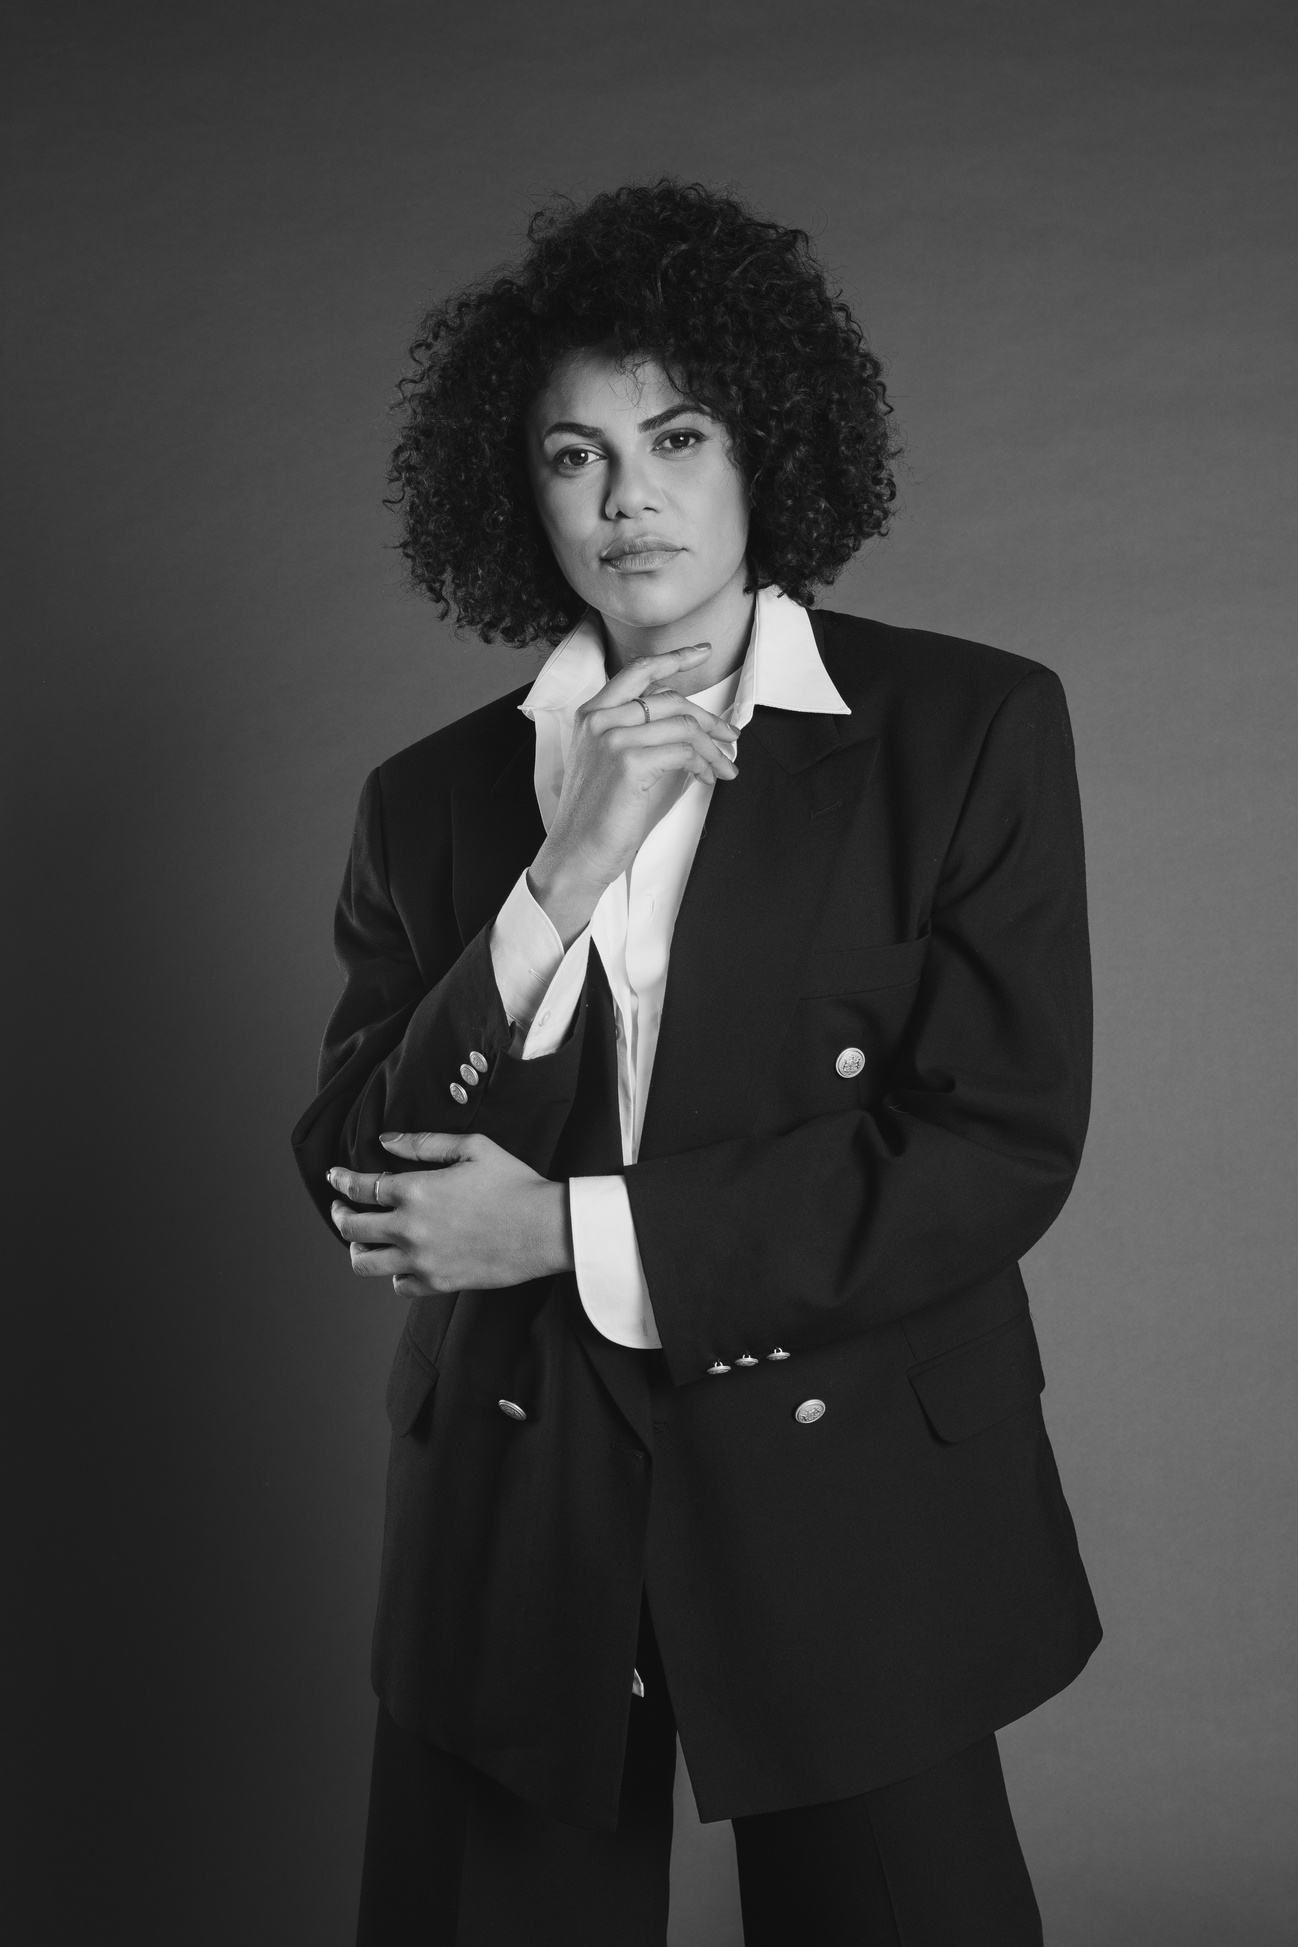  Portrait of a Fashionable Woman in Black Suit